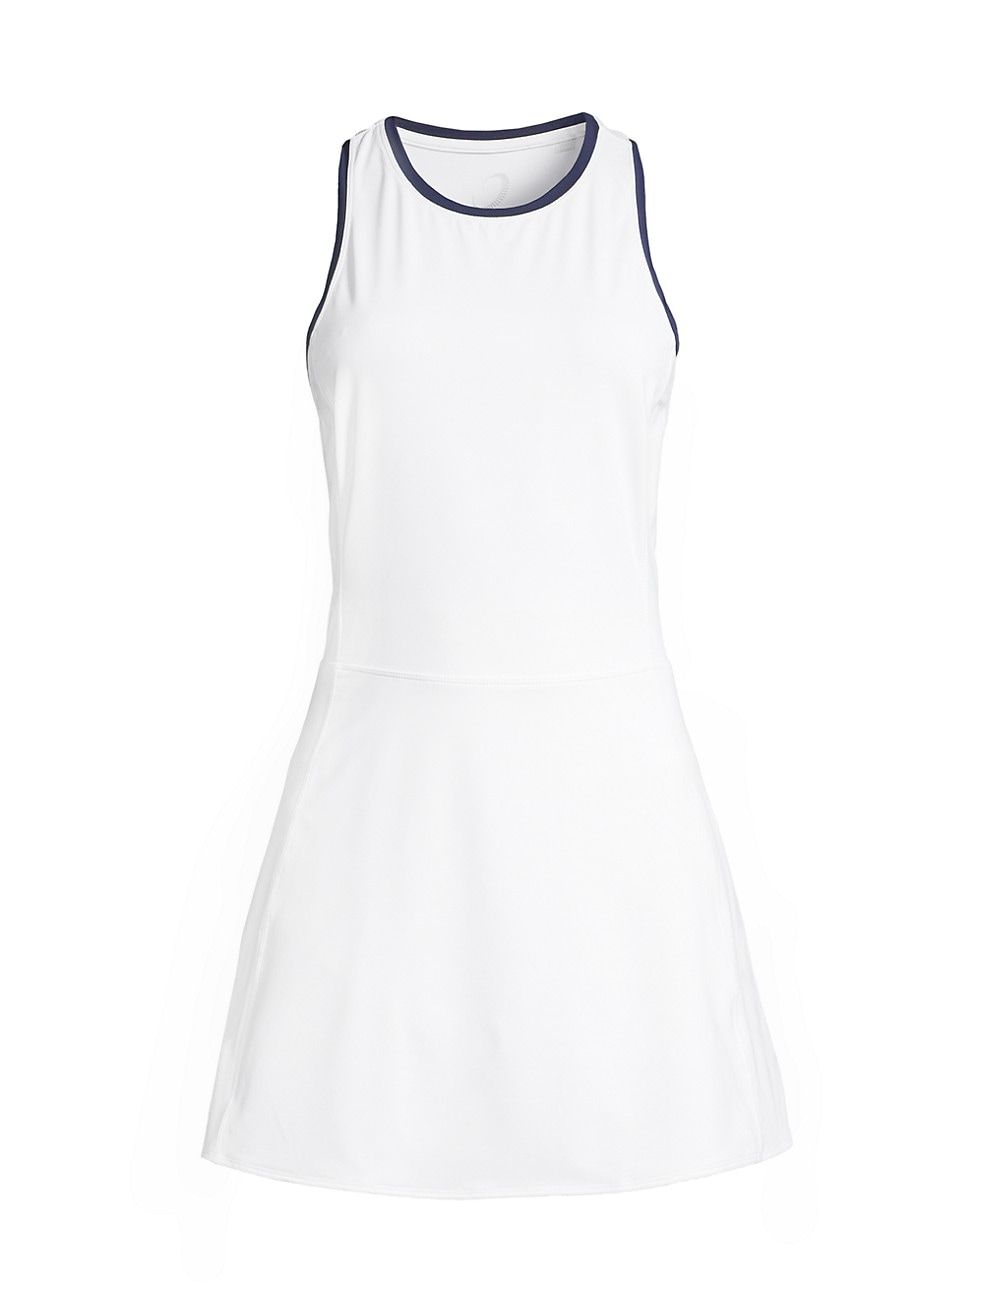 Zero Restriction Ace Sleeveless Tennis Dress | Saks Fifth Avenue